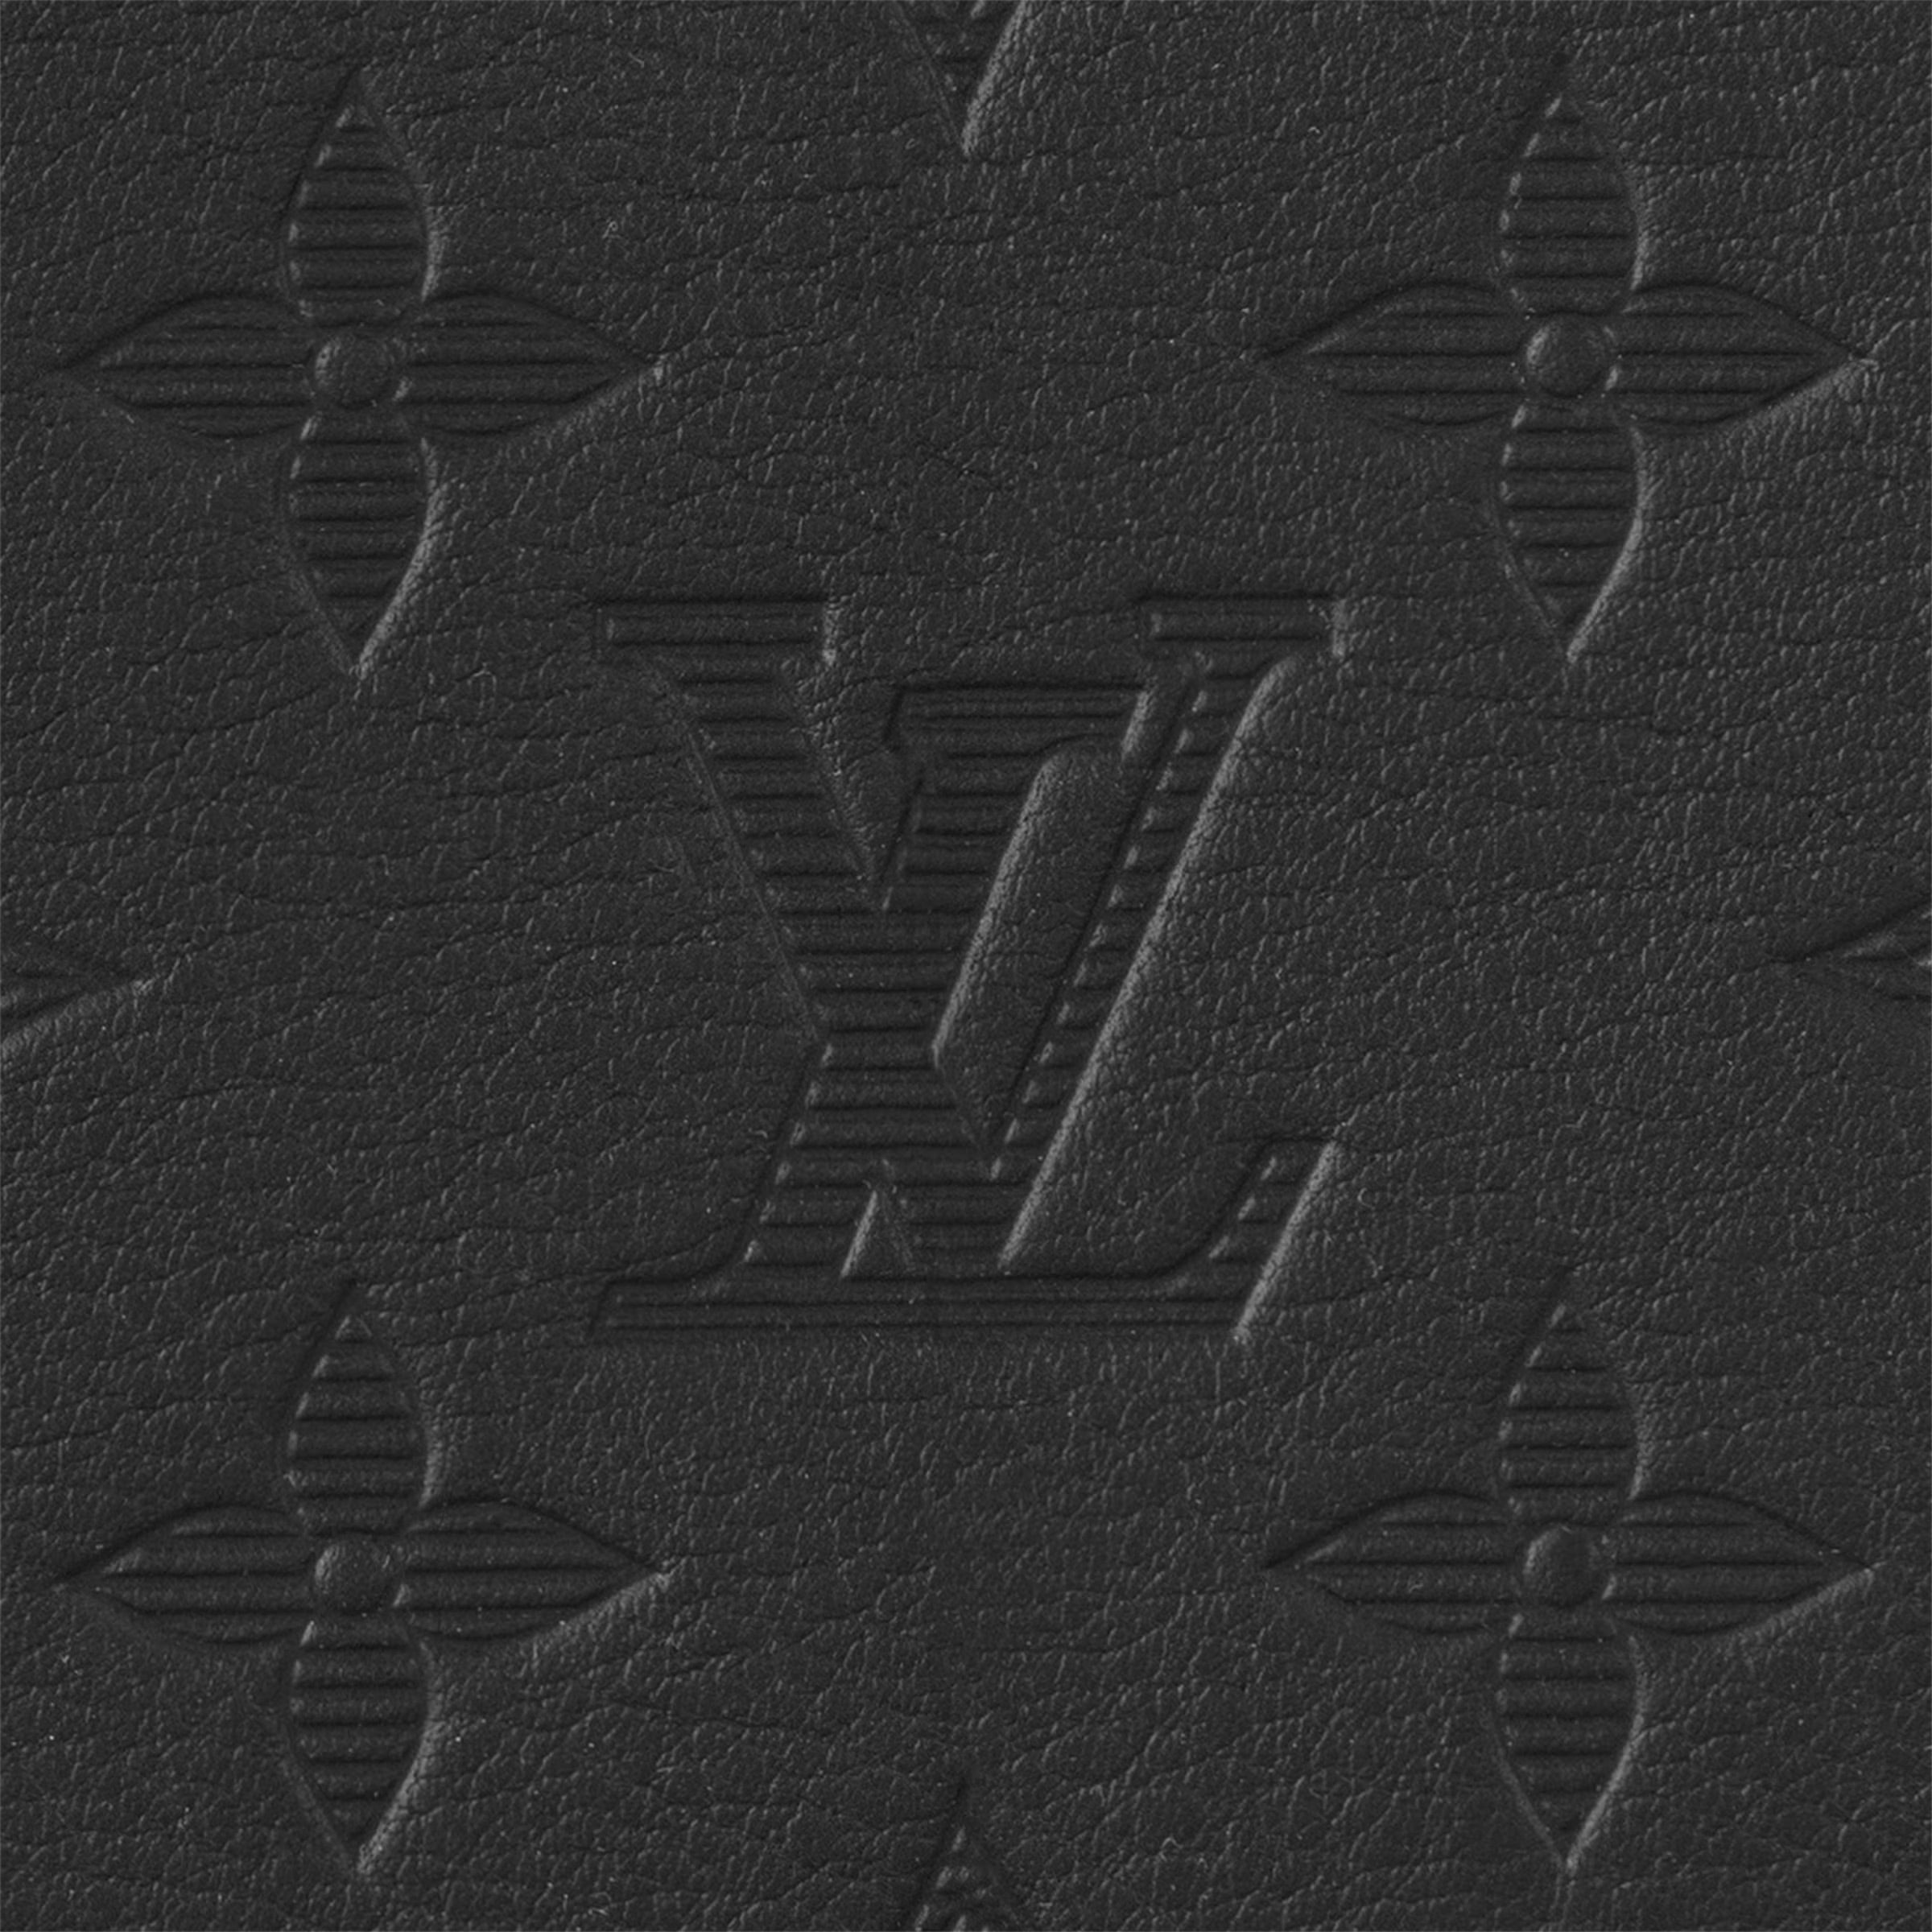 Hong Kong Stock - Louis Vuitton Multiple Wallet Monogram Shadow leather (black)